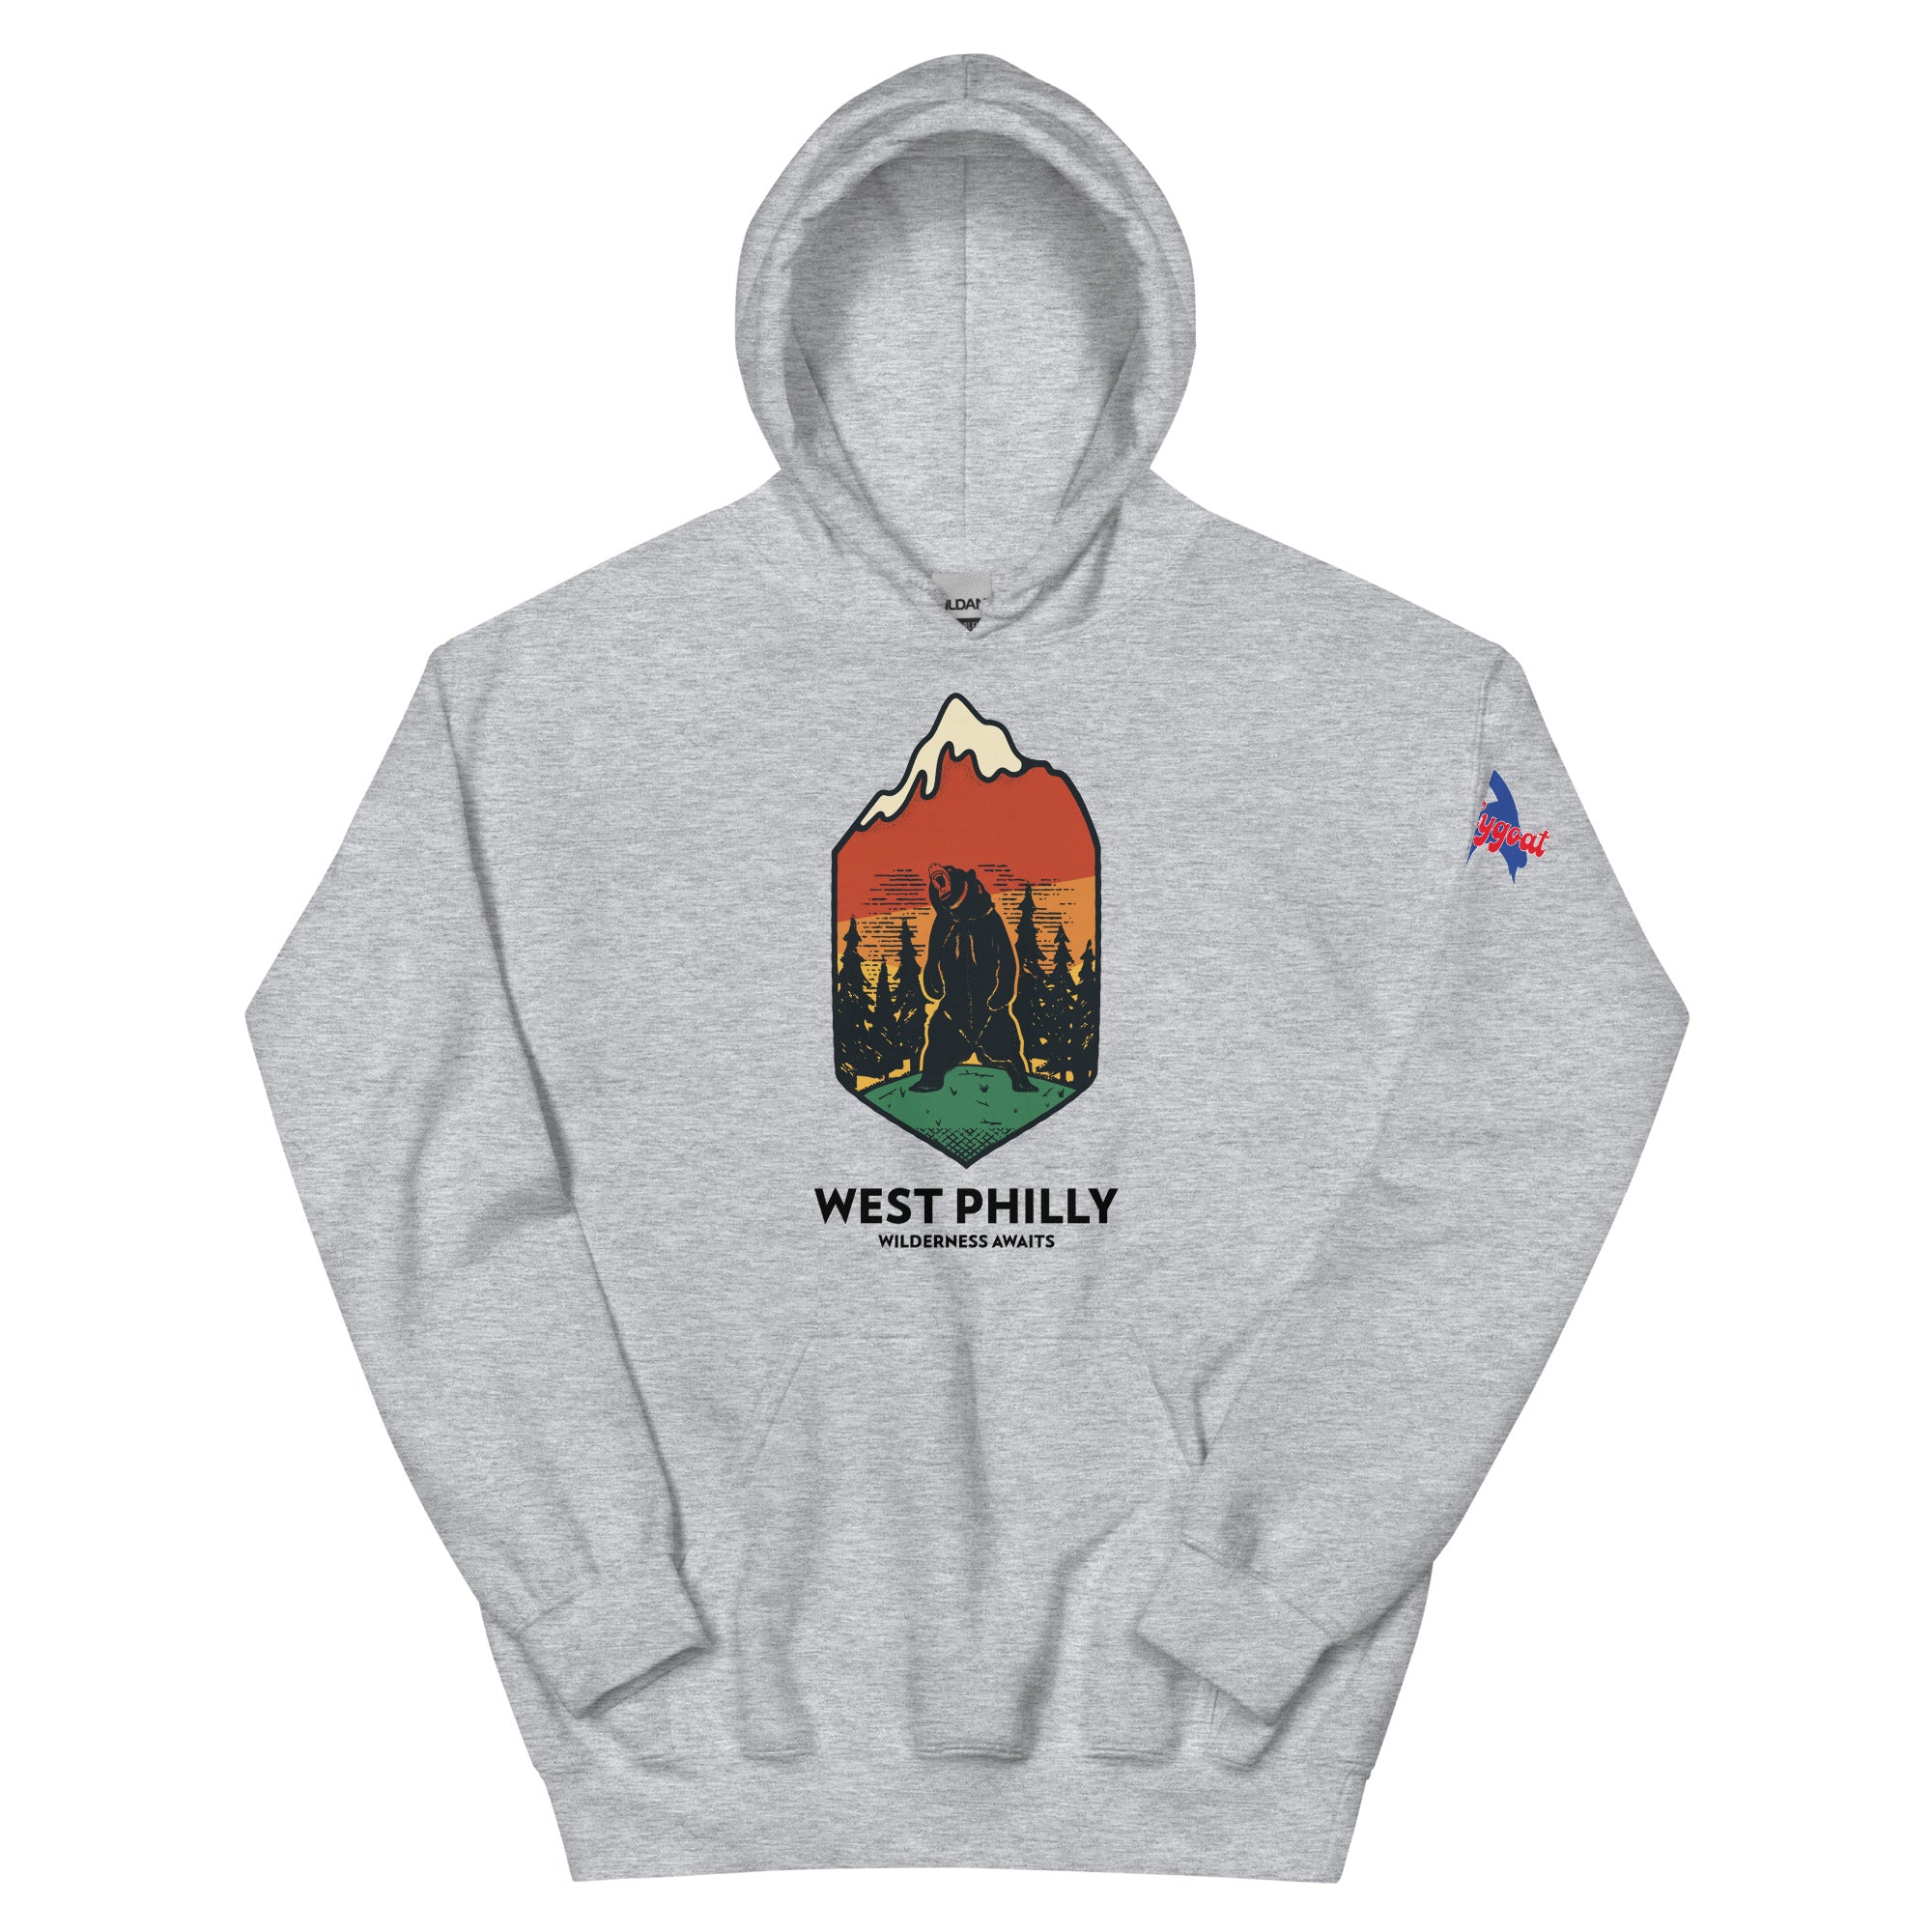 West Philly Philadelphia outdoors wildernesssport grey hoodie Phillygoat